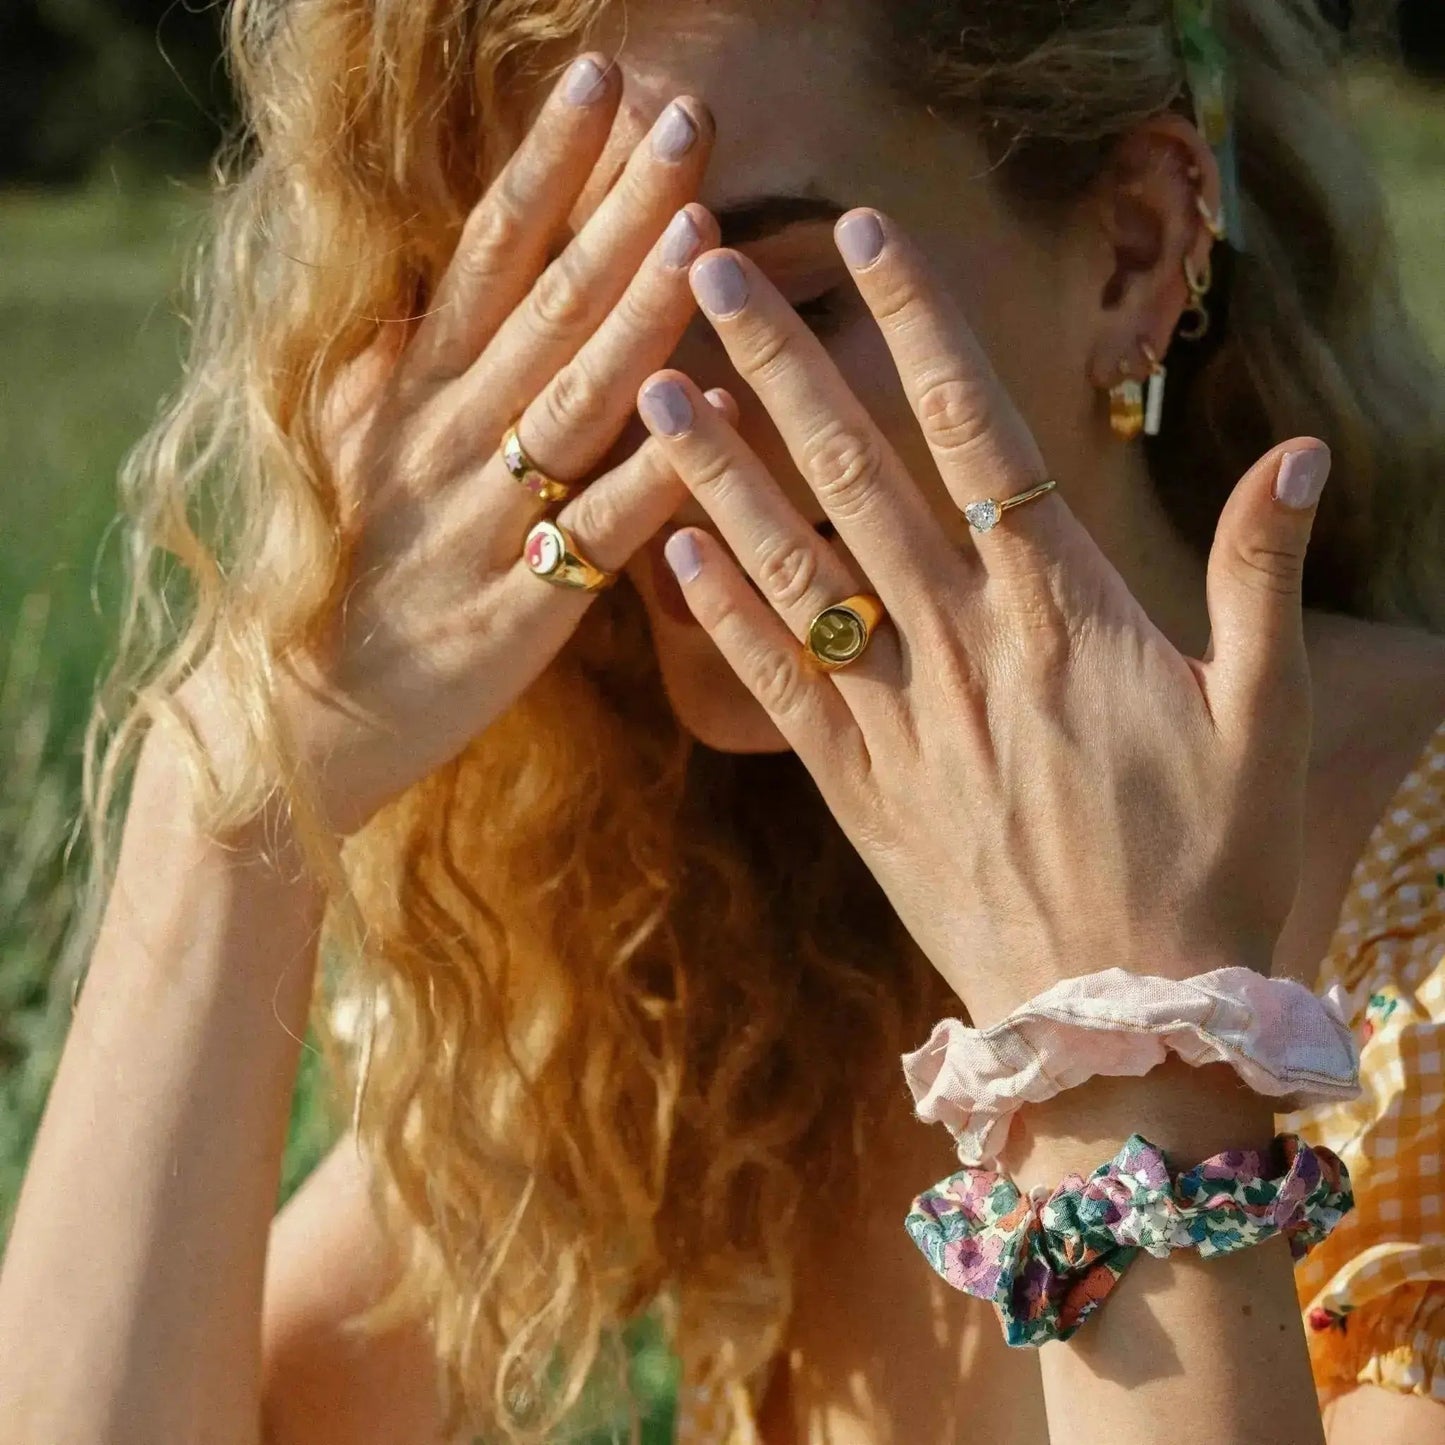 Smiley Ring Edelstahl vergoldet - KNOCKNOK Fashion